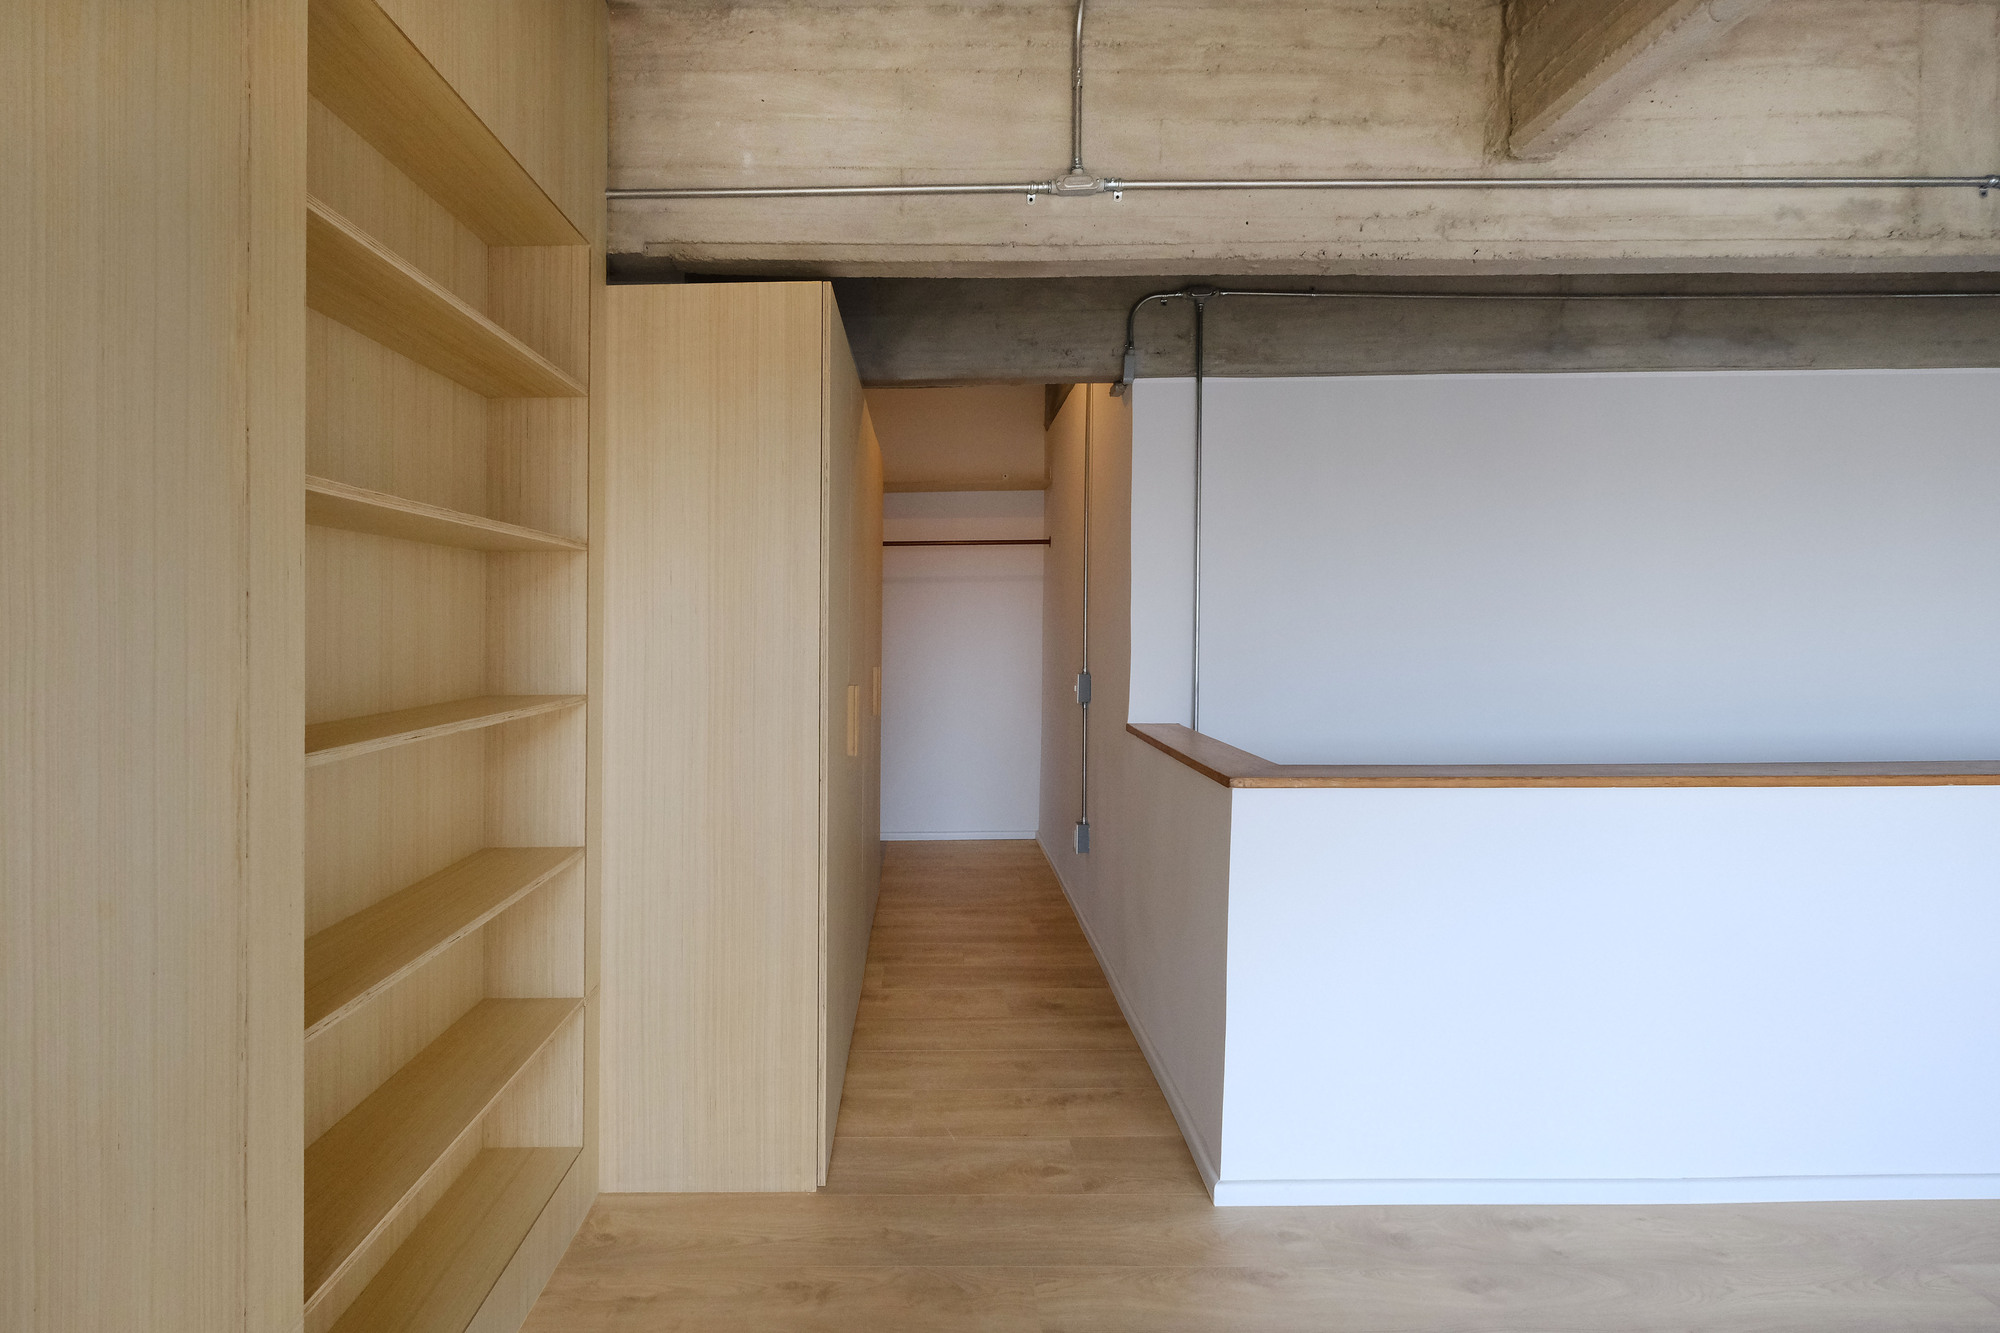 CUPA 公寓 / Mariel Lozano + José Esparza|ART-Arrakis | 建筑室内设计的创新与灵感